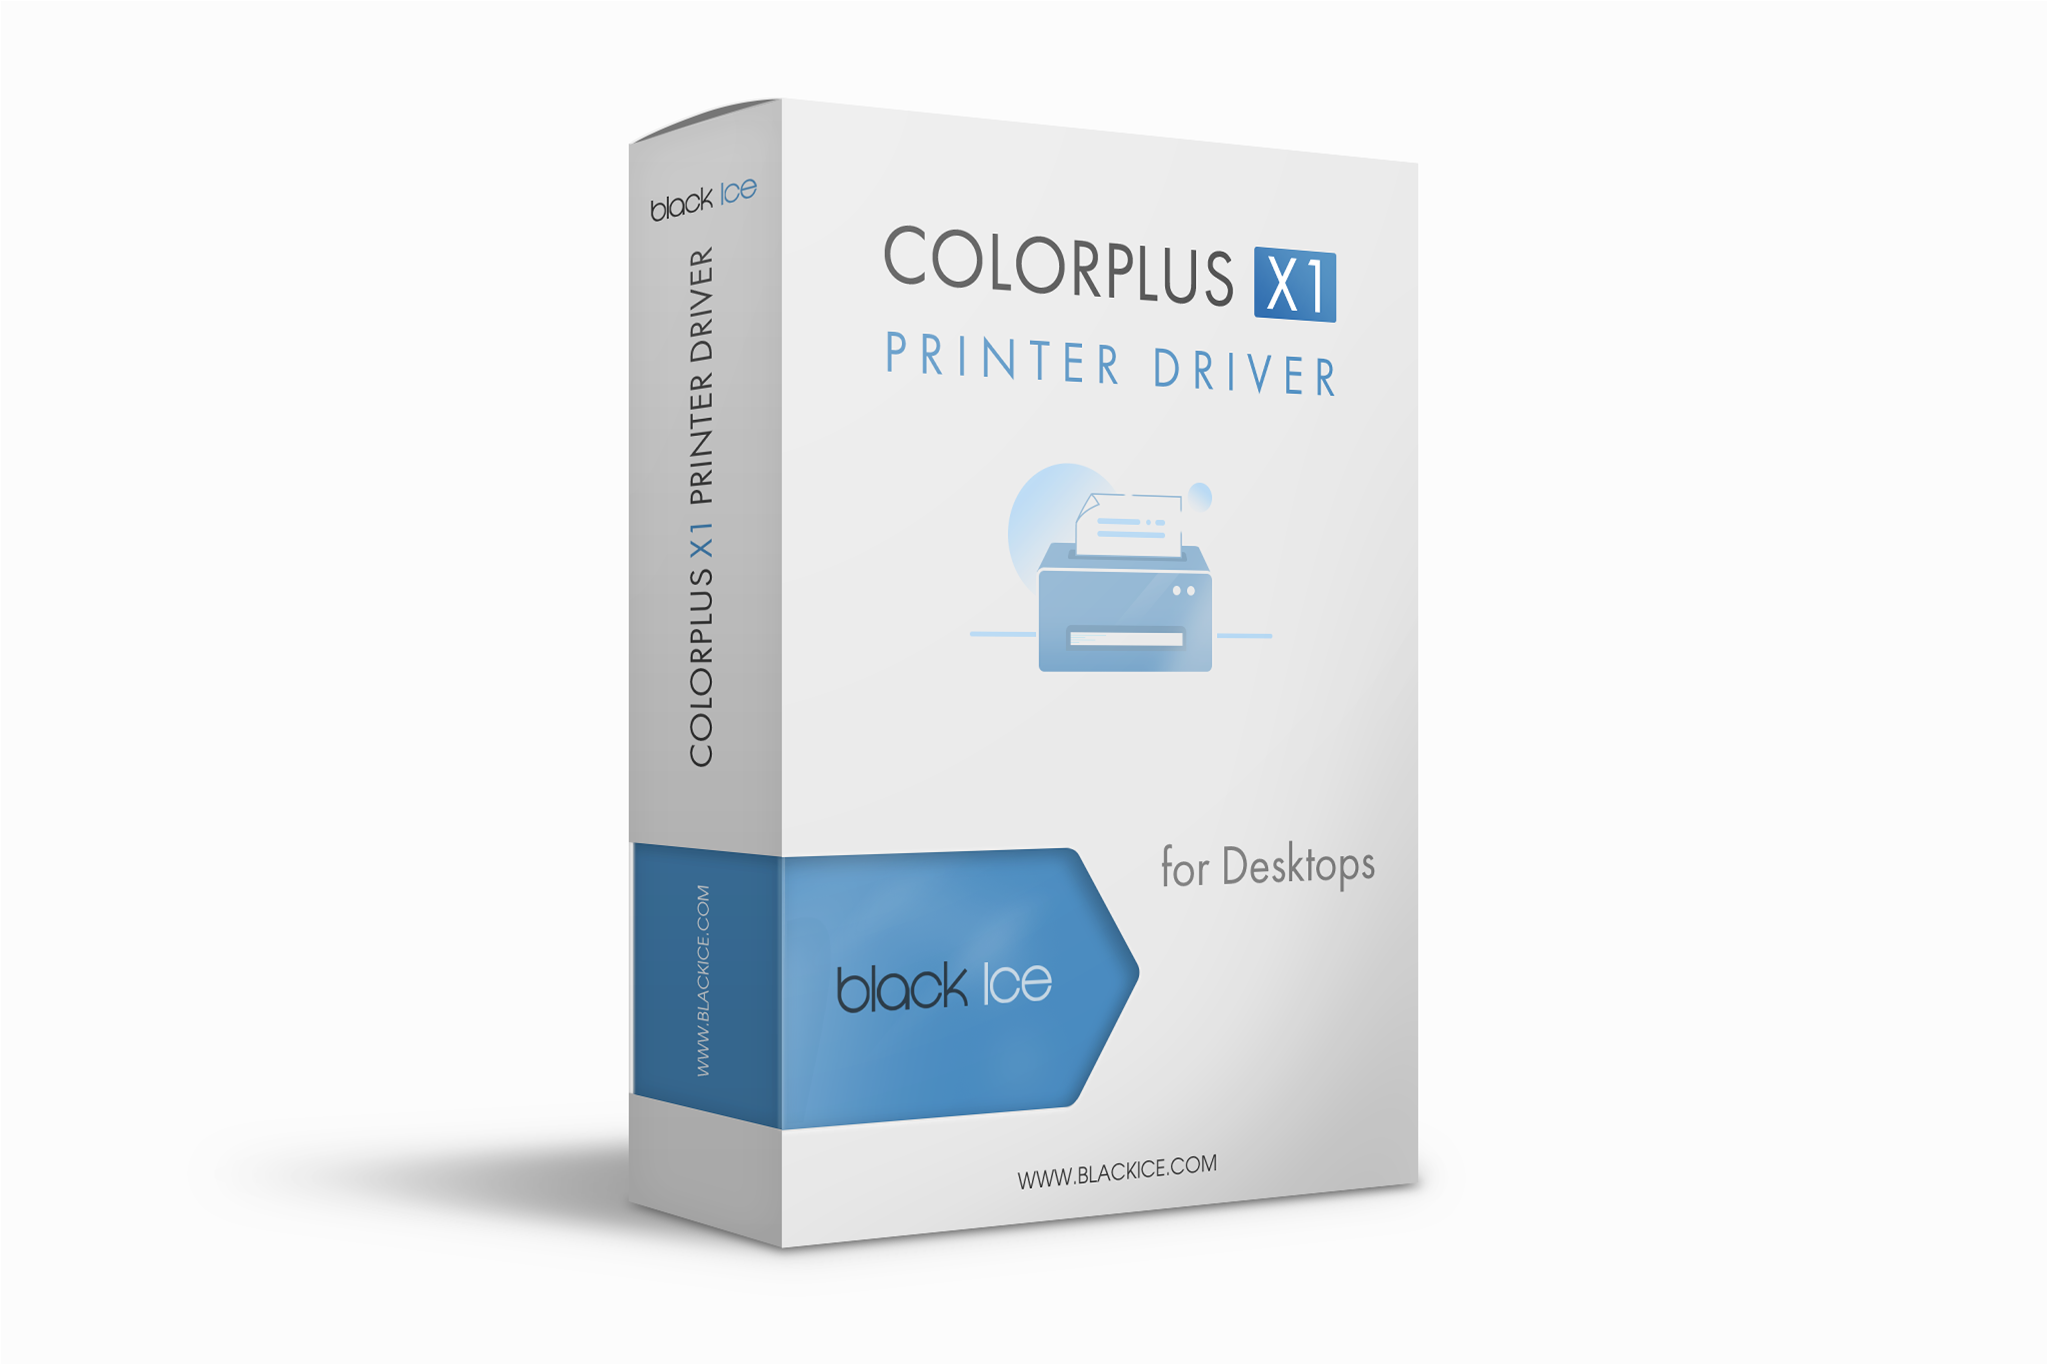 ColorPlus X1 Printer Driver Subscription (Single License and 5 multi-printers or ports)